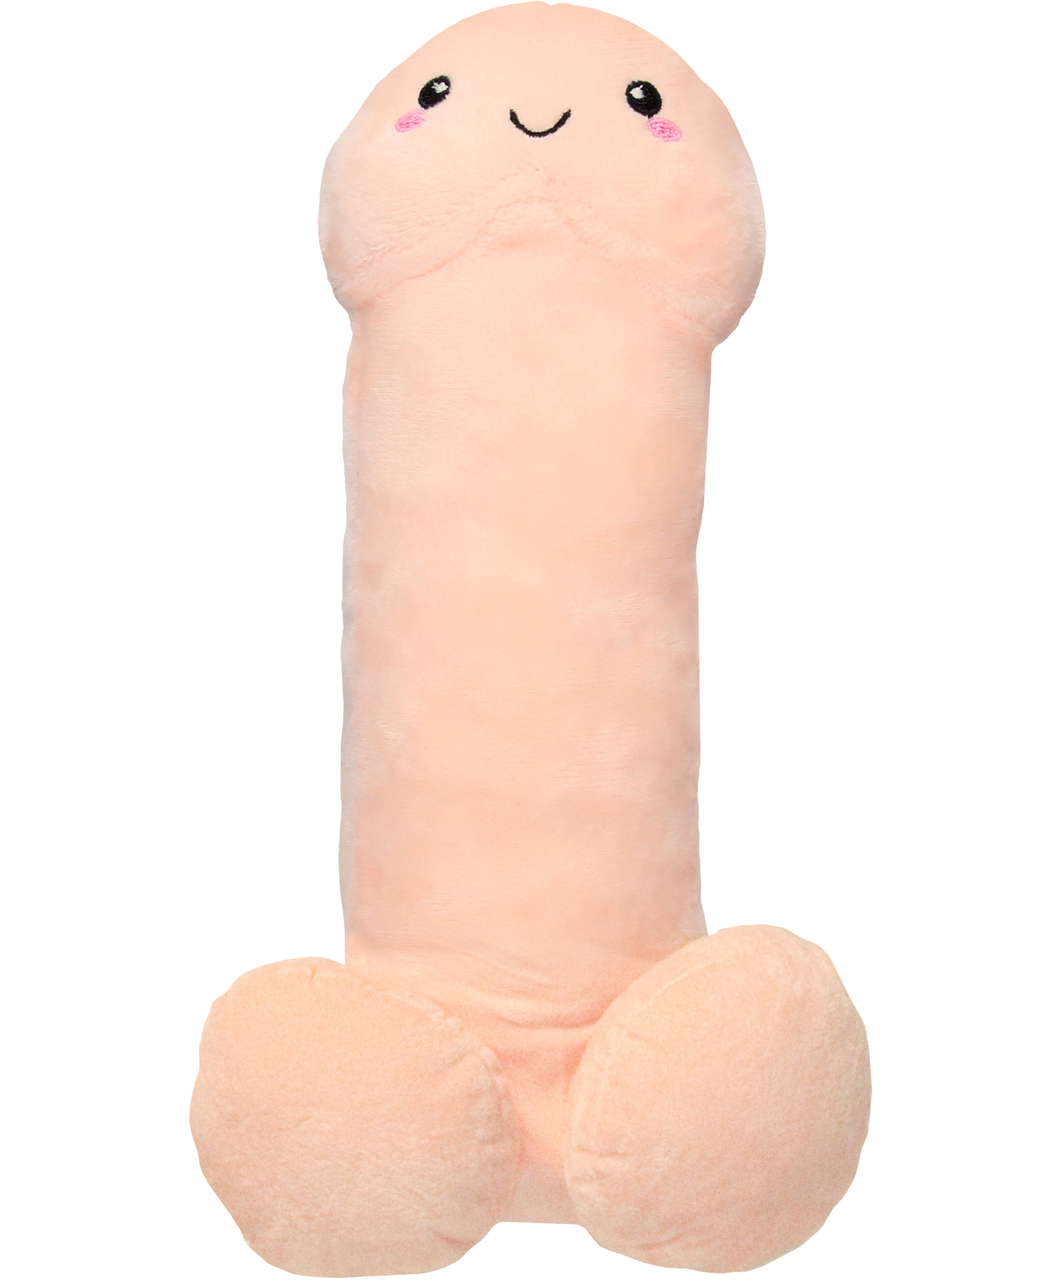 Shots Toys Cute Penis Plushie